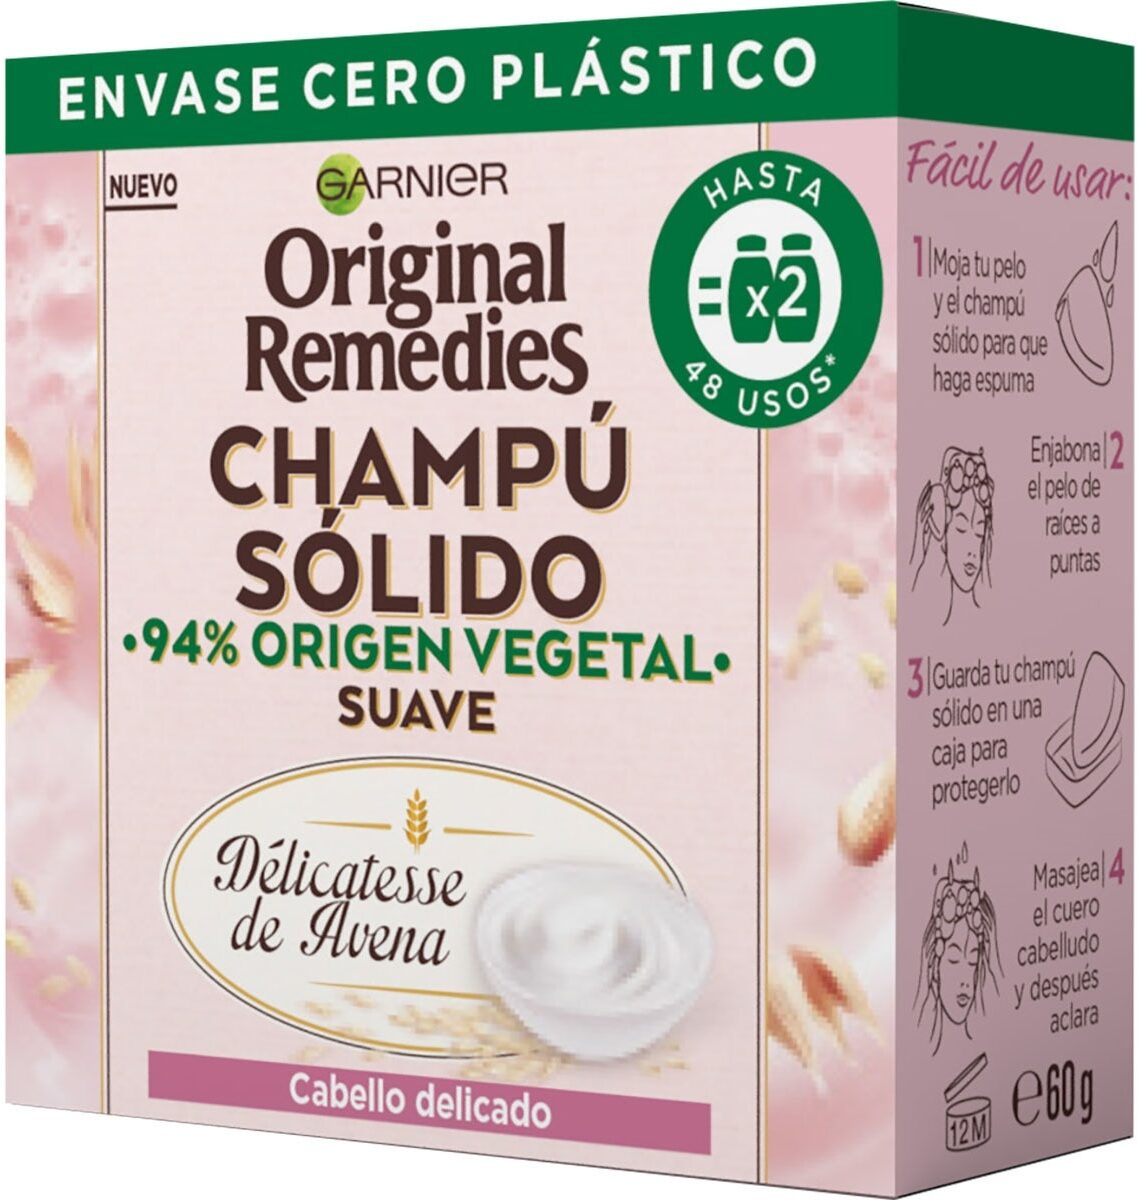 Original remedies champú solido avena - Produktas - en